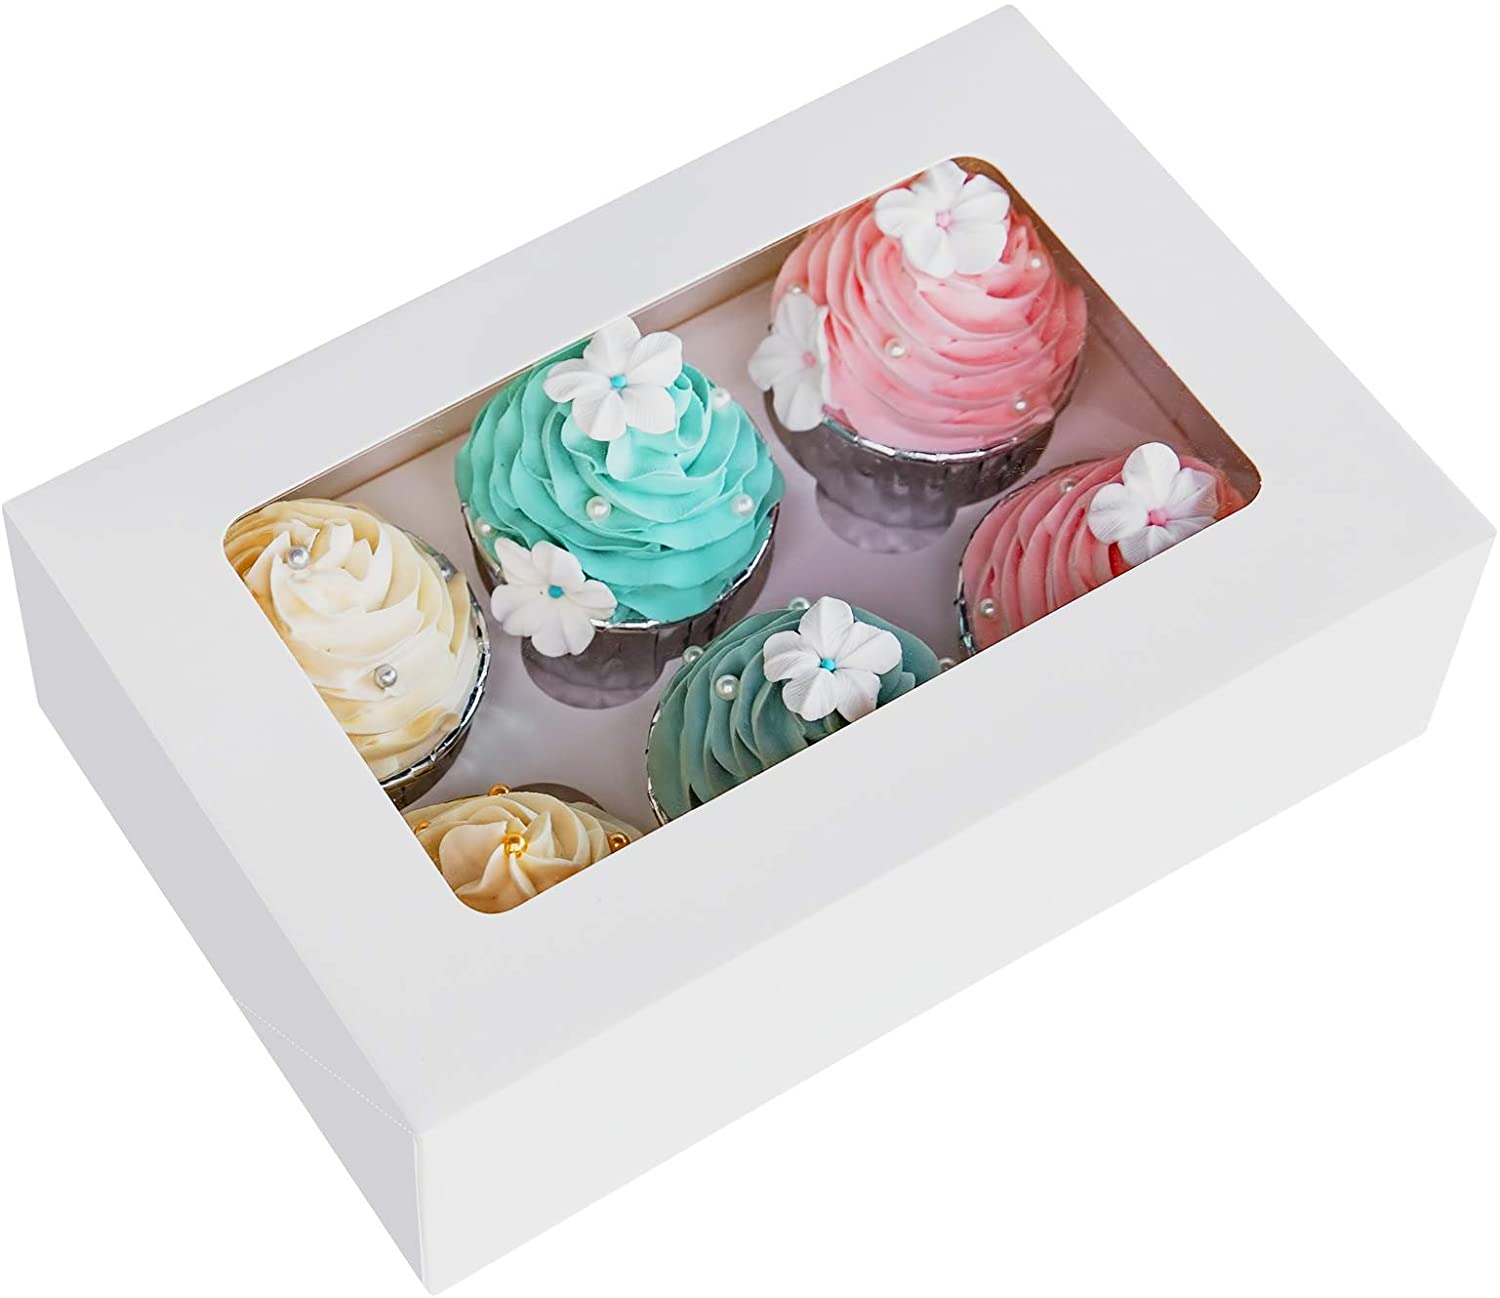 Cupcake Cake Window BoxesPremium QualityCake Decorating Craft4 x Tray